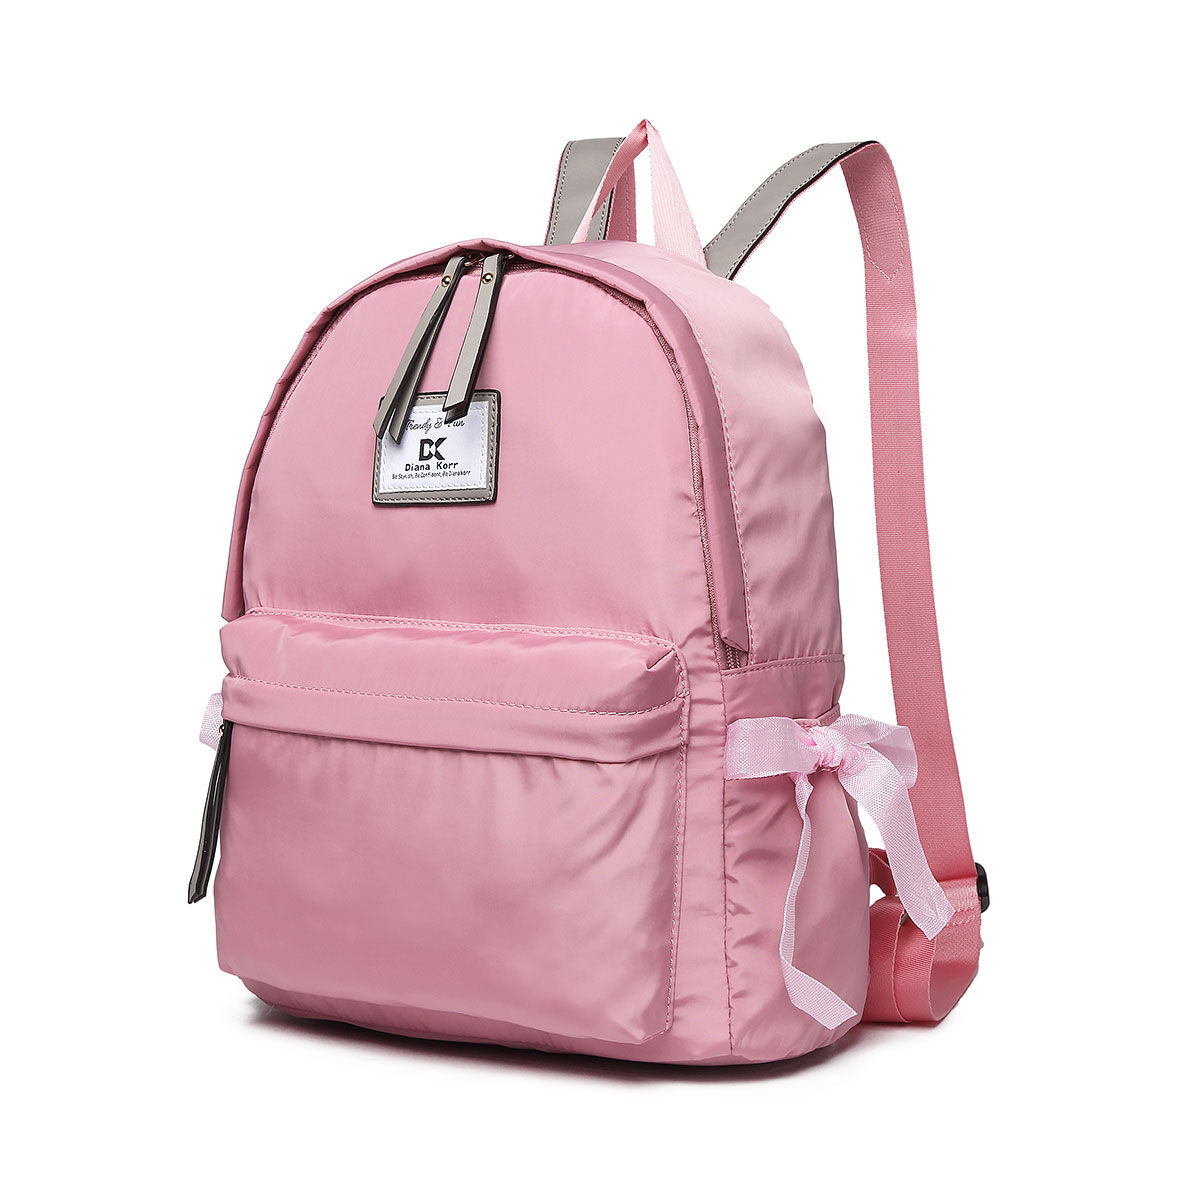 Diana Korr Georgie Ribbon Detail Backpack - Pink: Buy Diana Korr ...